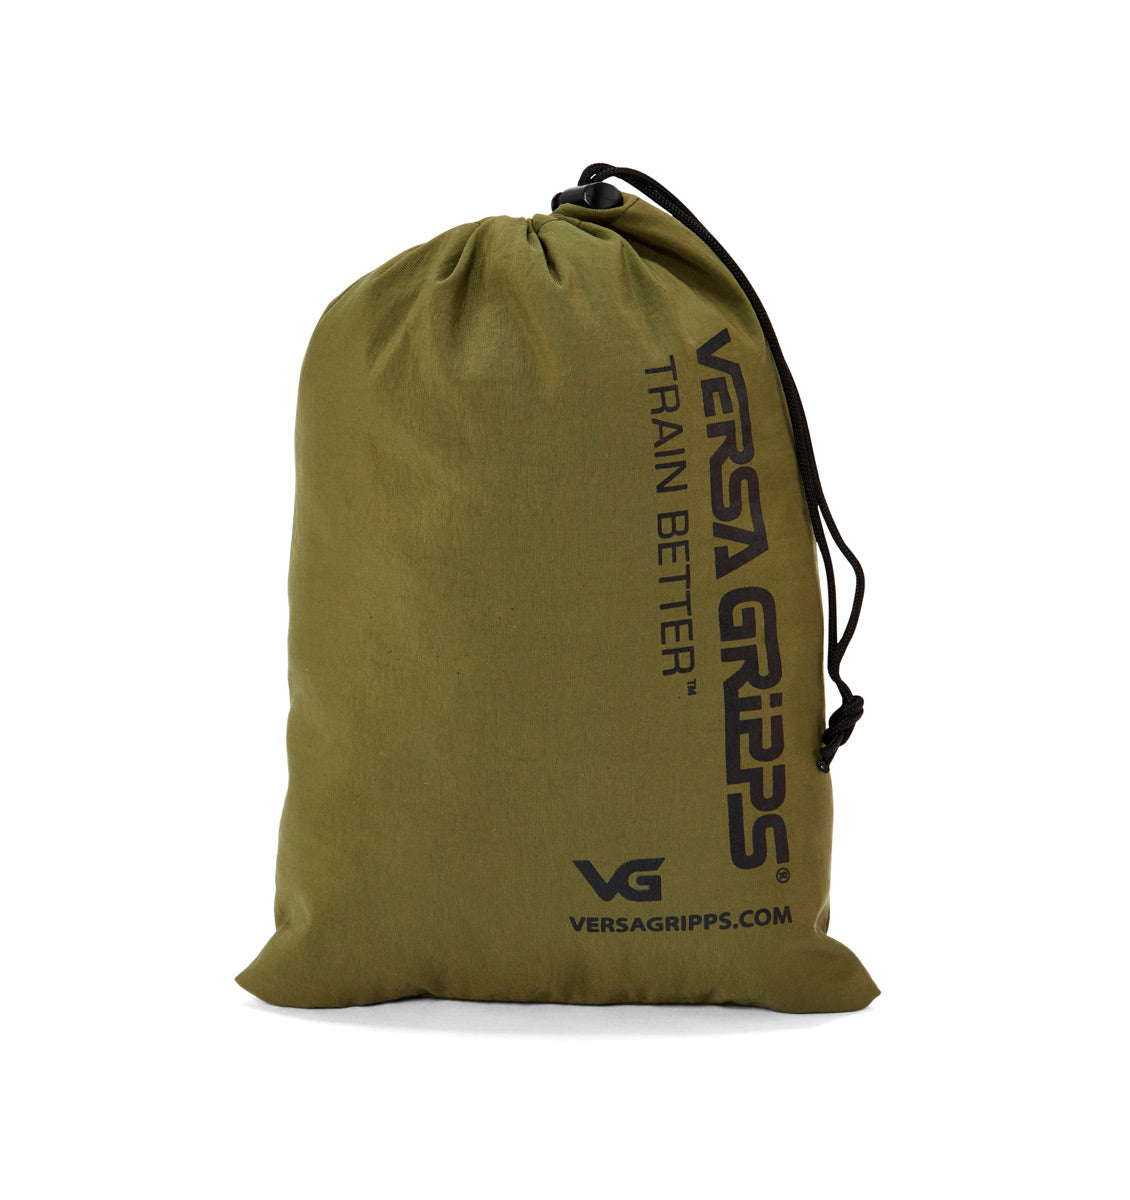 Versa Gripps Breathable 100% Taslan VG Stuffsak Bag Camo Front